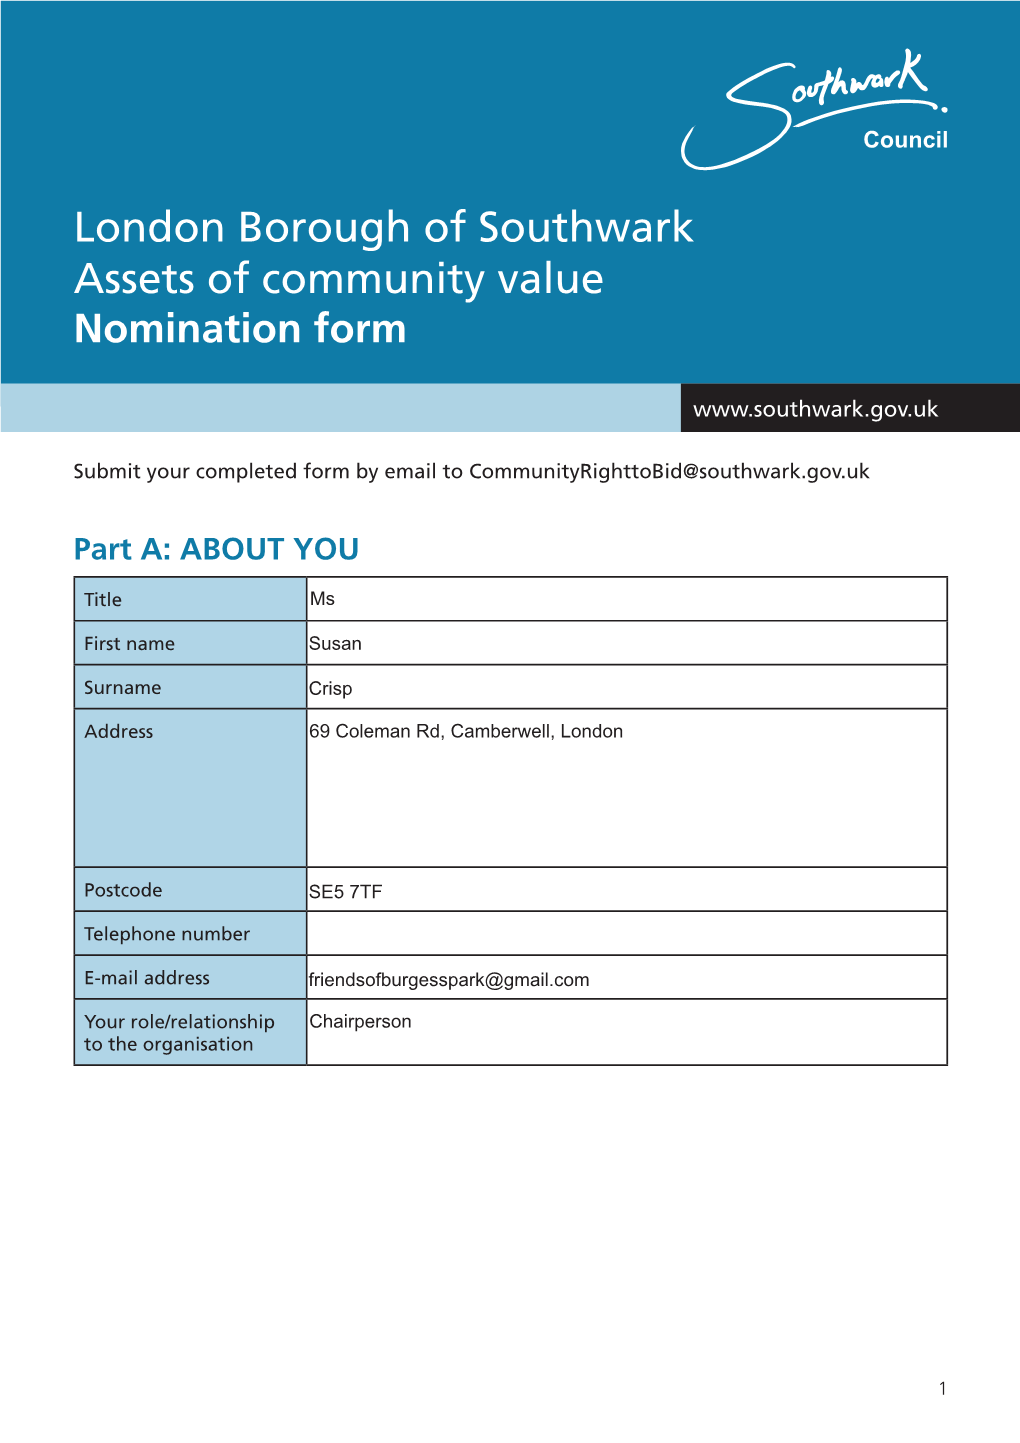 London Borough of Southwark Assets of Community Value Nomination Form